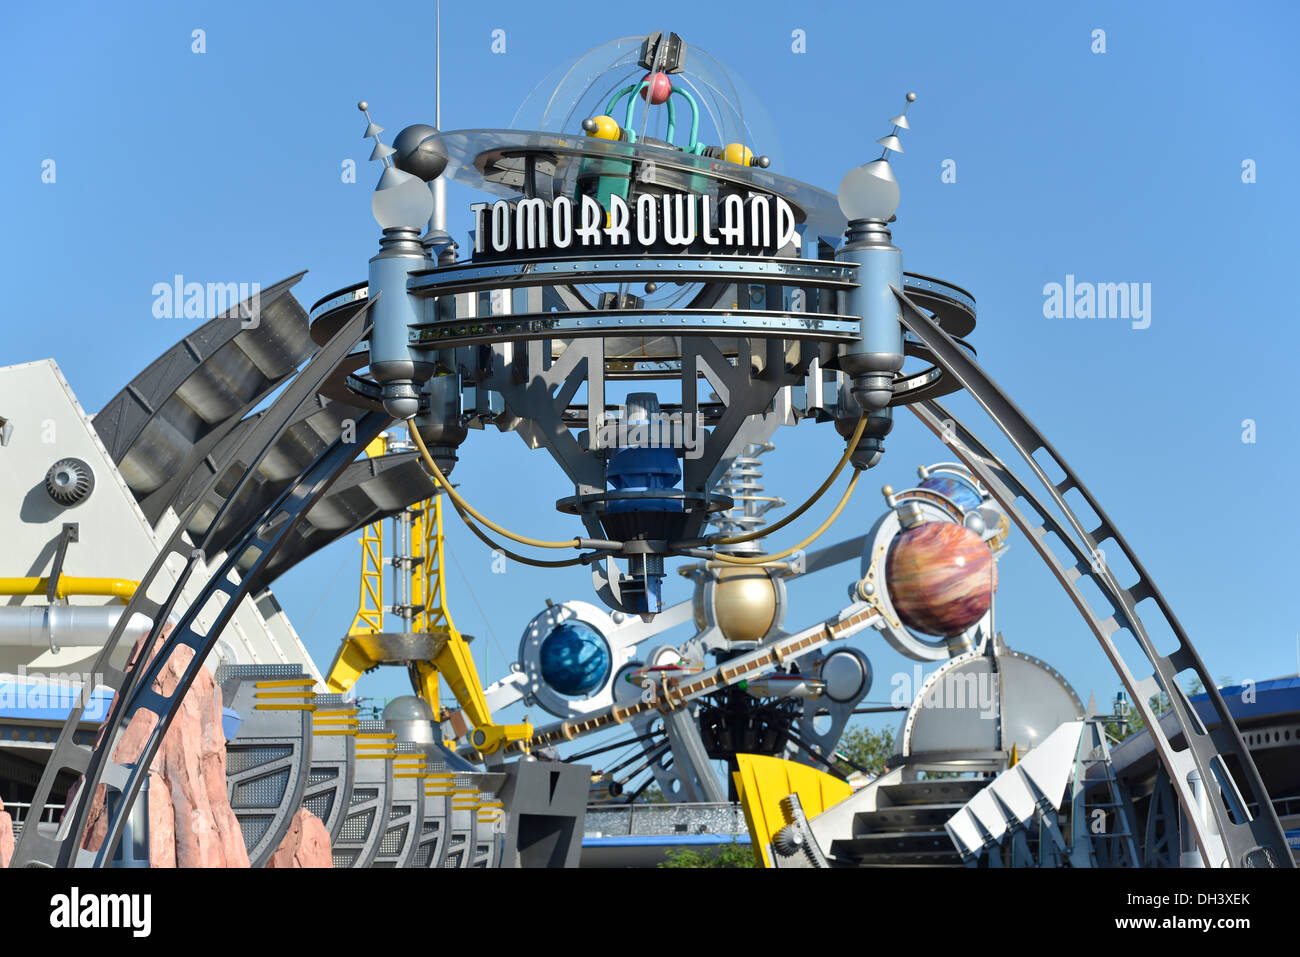 Tomorrowland signe au-dessus de l'entrée de Magic Kingdom, Disney World Resort, Orlando, Floride Banque D'Images